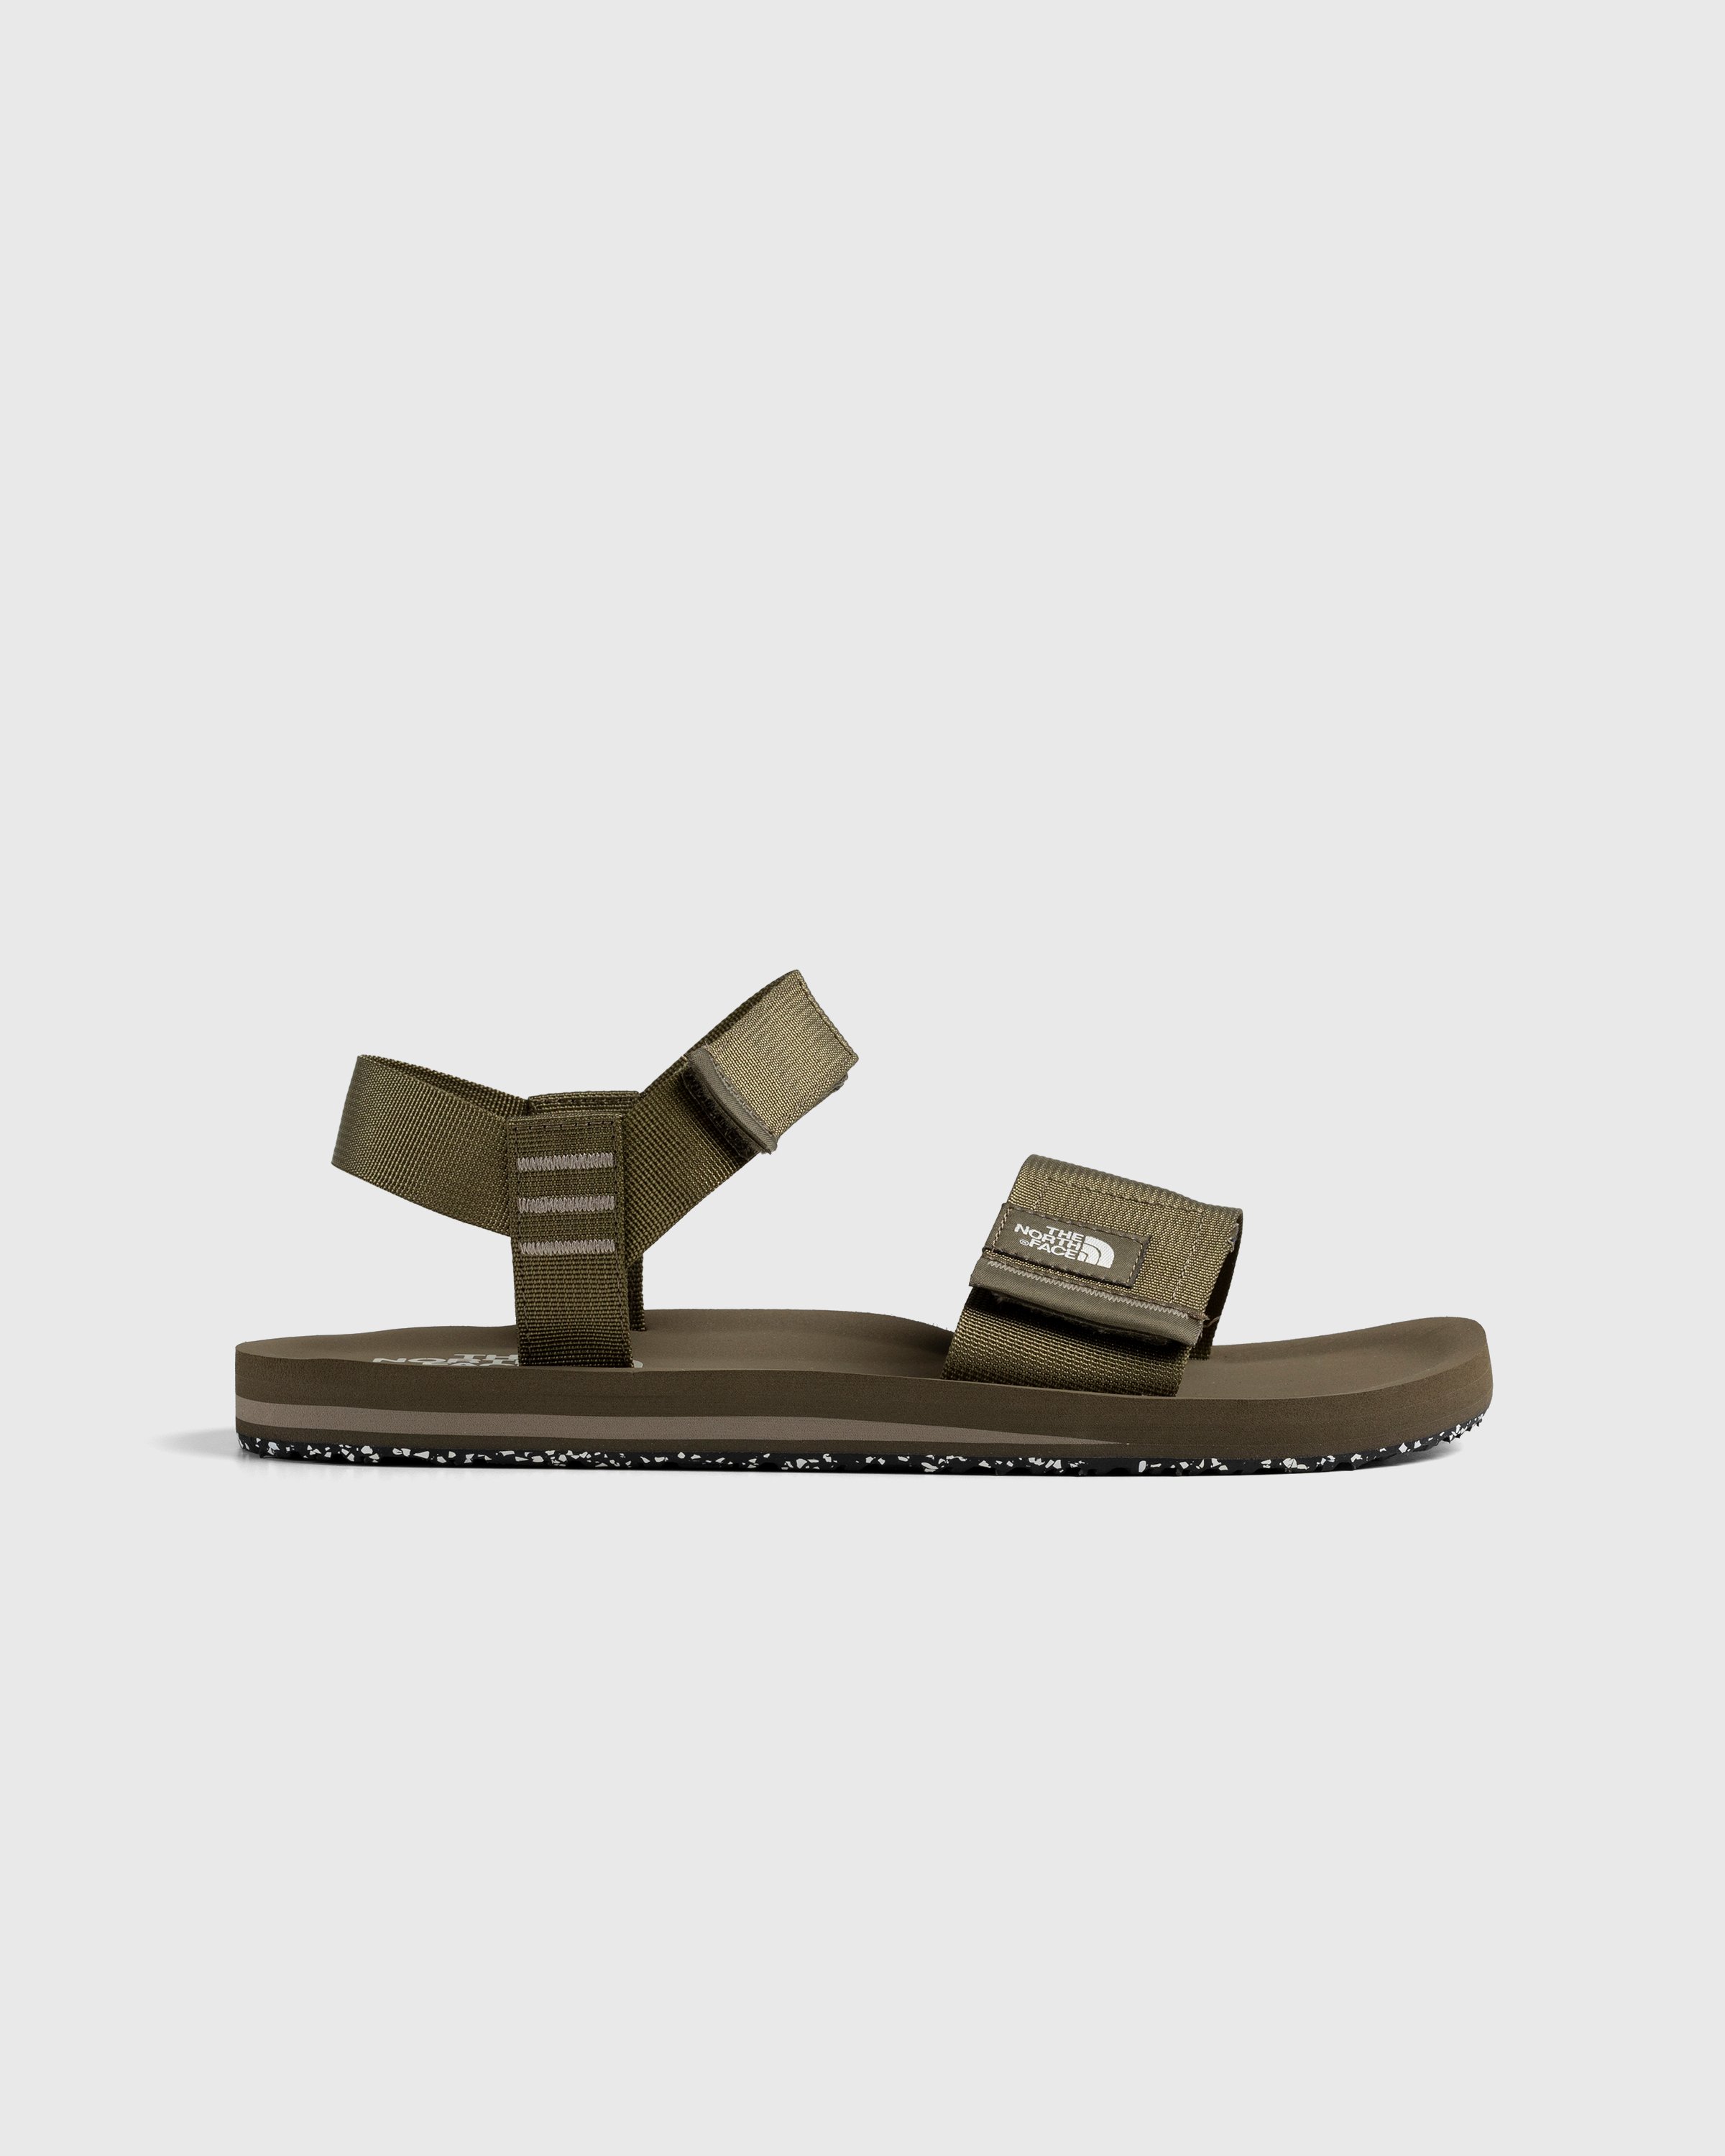 The North Face - Skeena Sport Sandal Militaryolive/Mineralgrey - Footwear - Green - Image 1